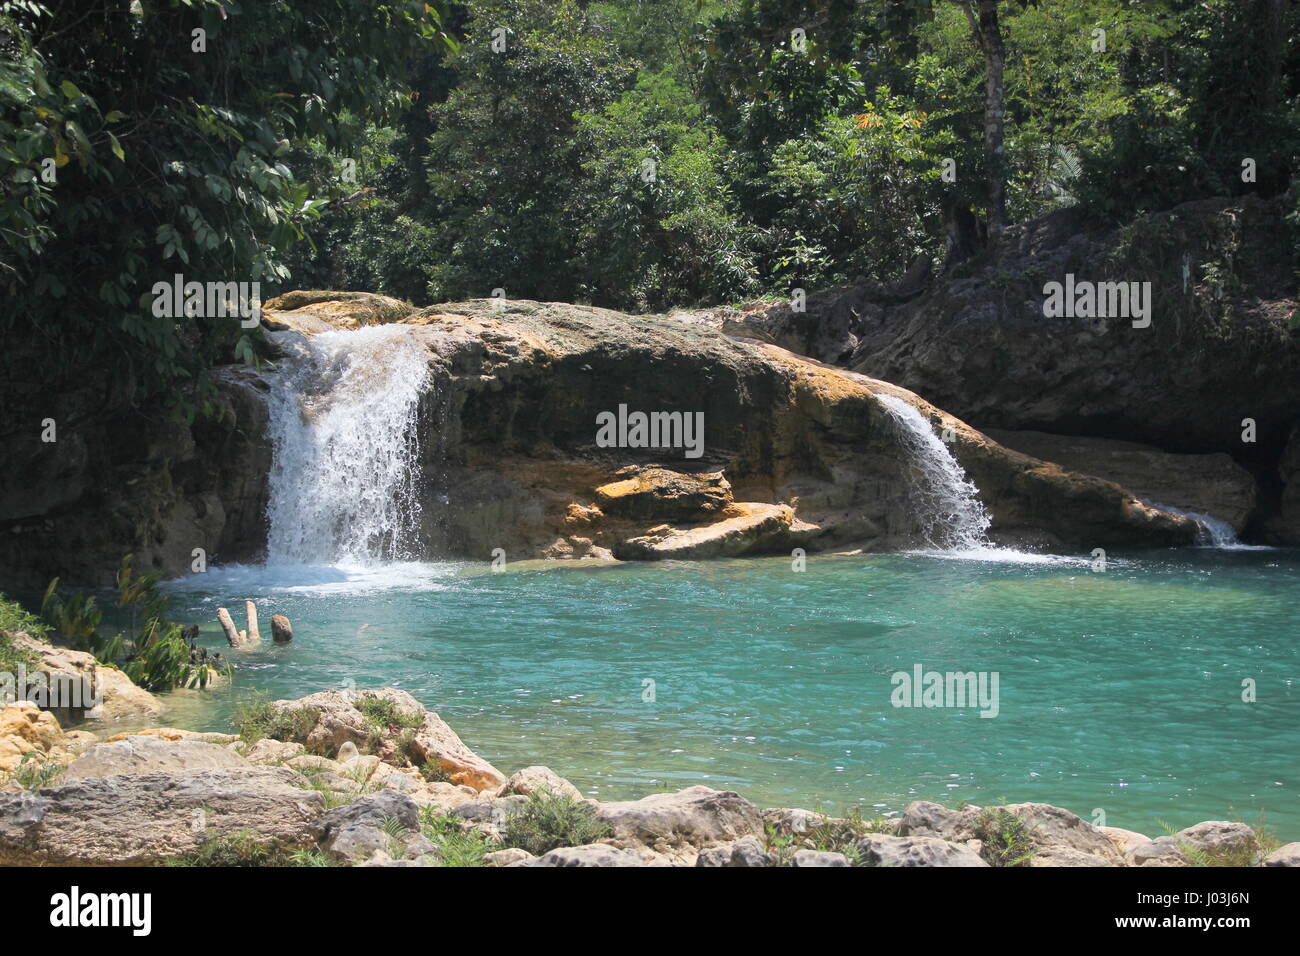 Bao-Bao Falls, Lianga, Surigao del Sur, Philippines A hidden gem in the southern Philippines Stock Photo